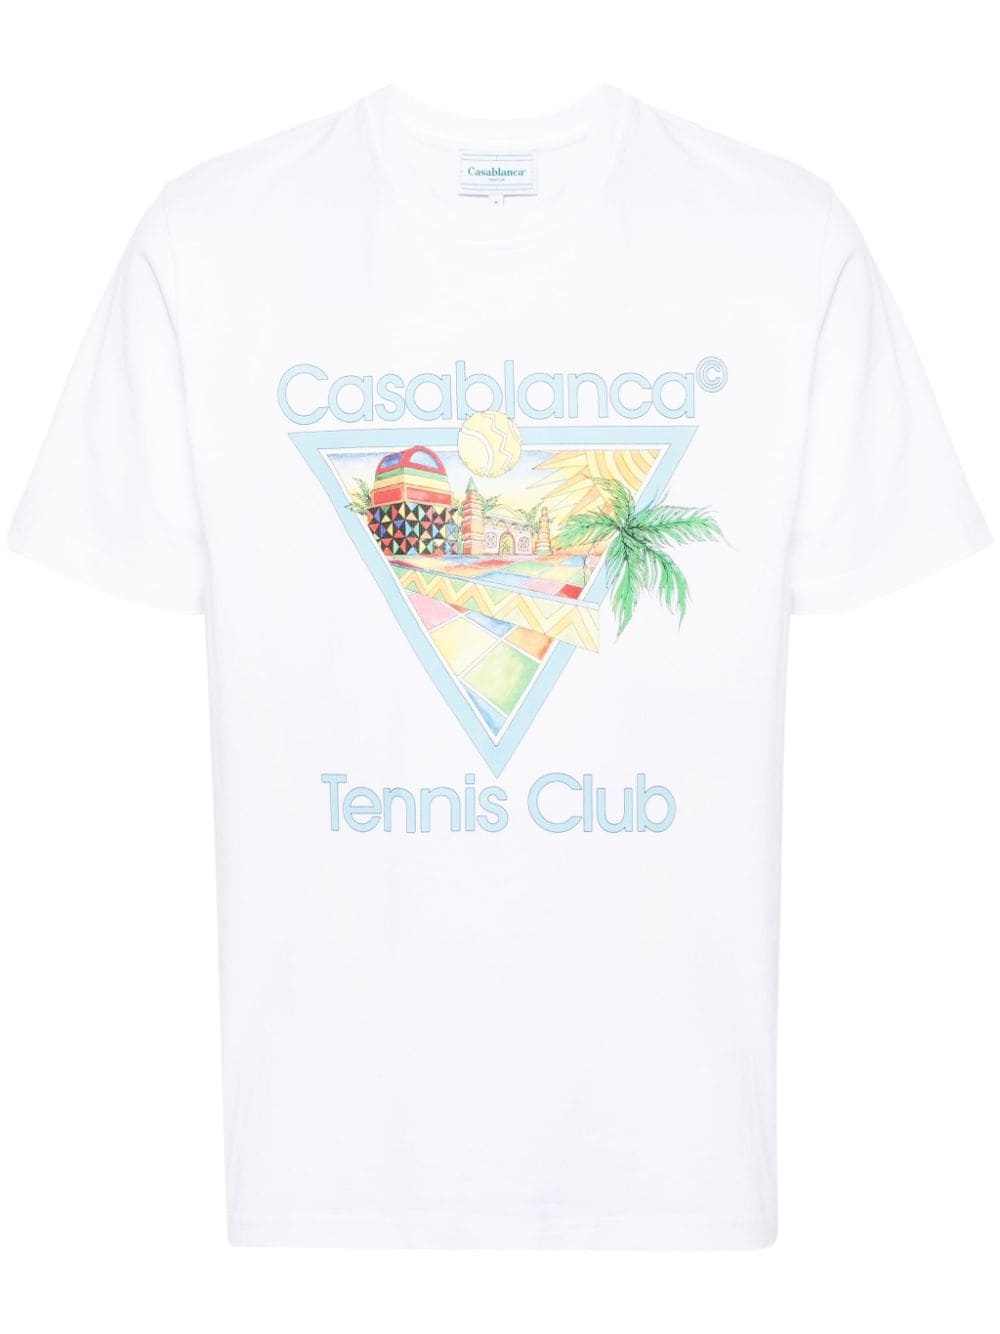 Afro Cubism Tennis Club cotton T-shirt - 1